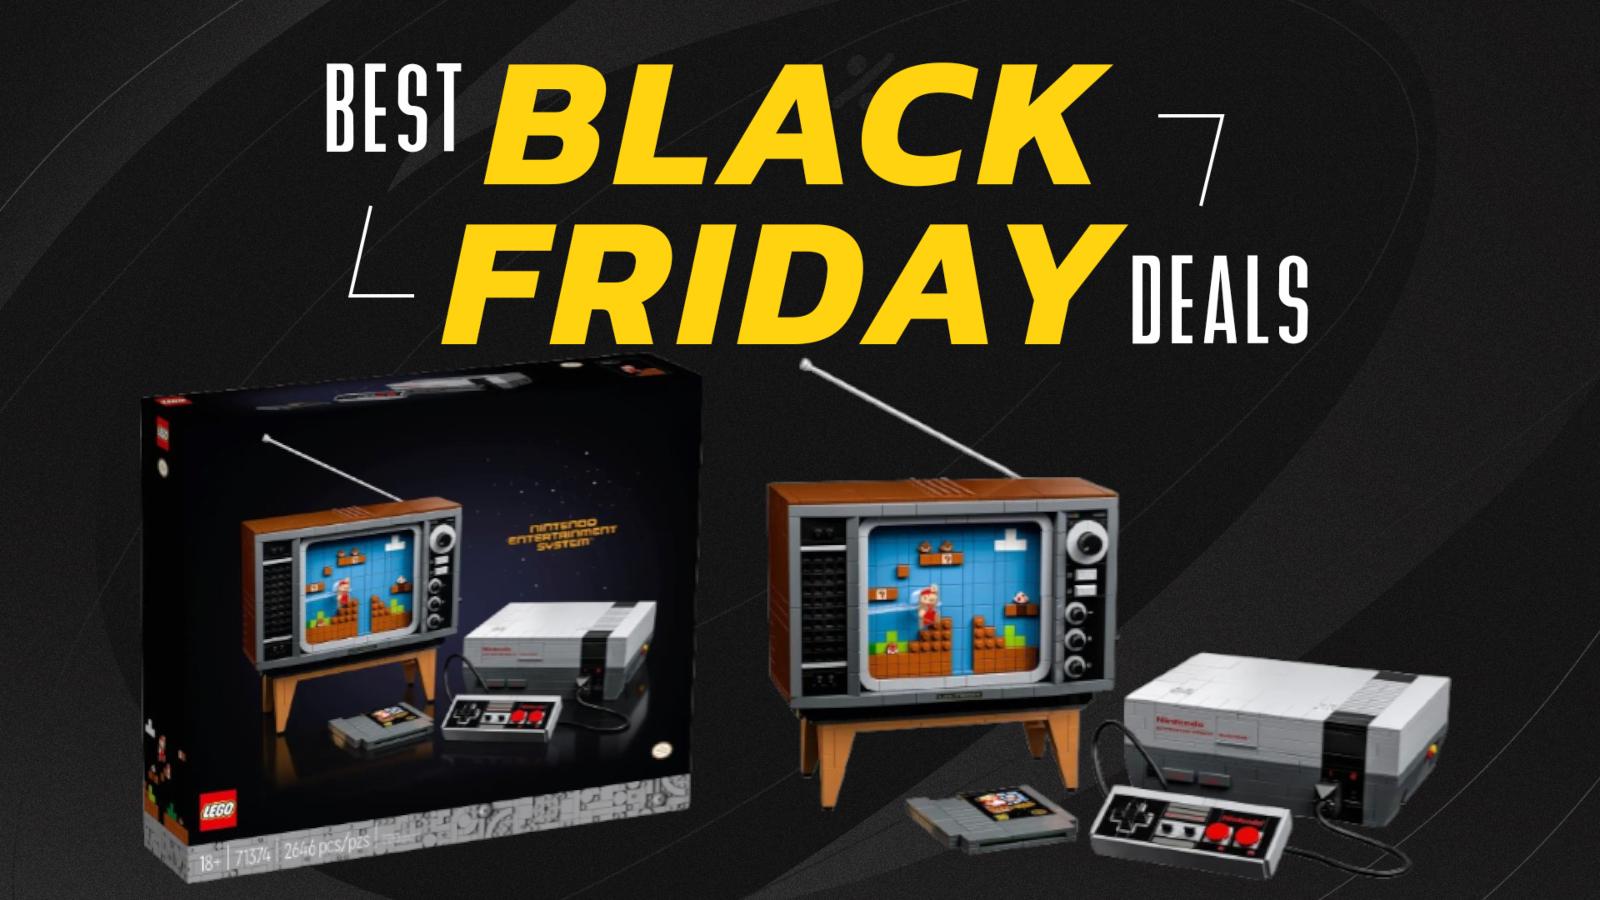 Black friday deals Amazon LEGO NES cover image